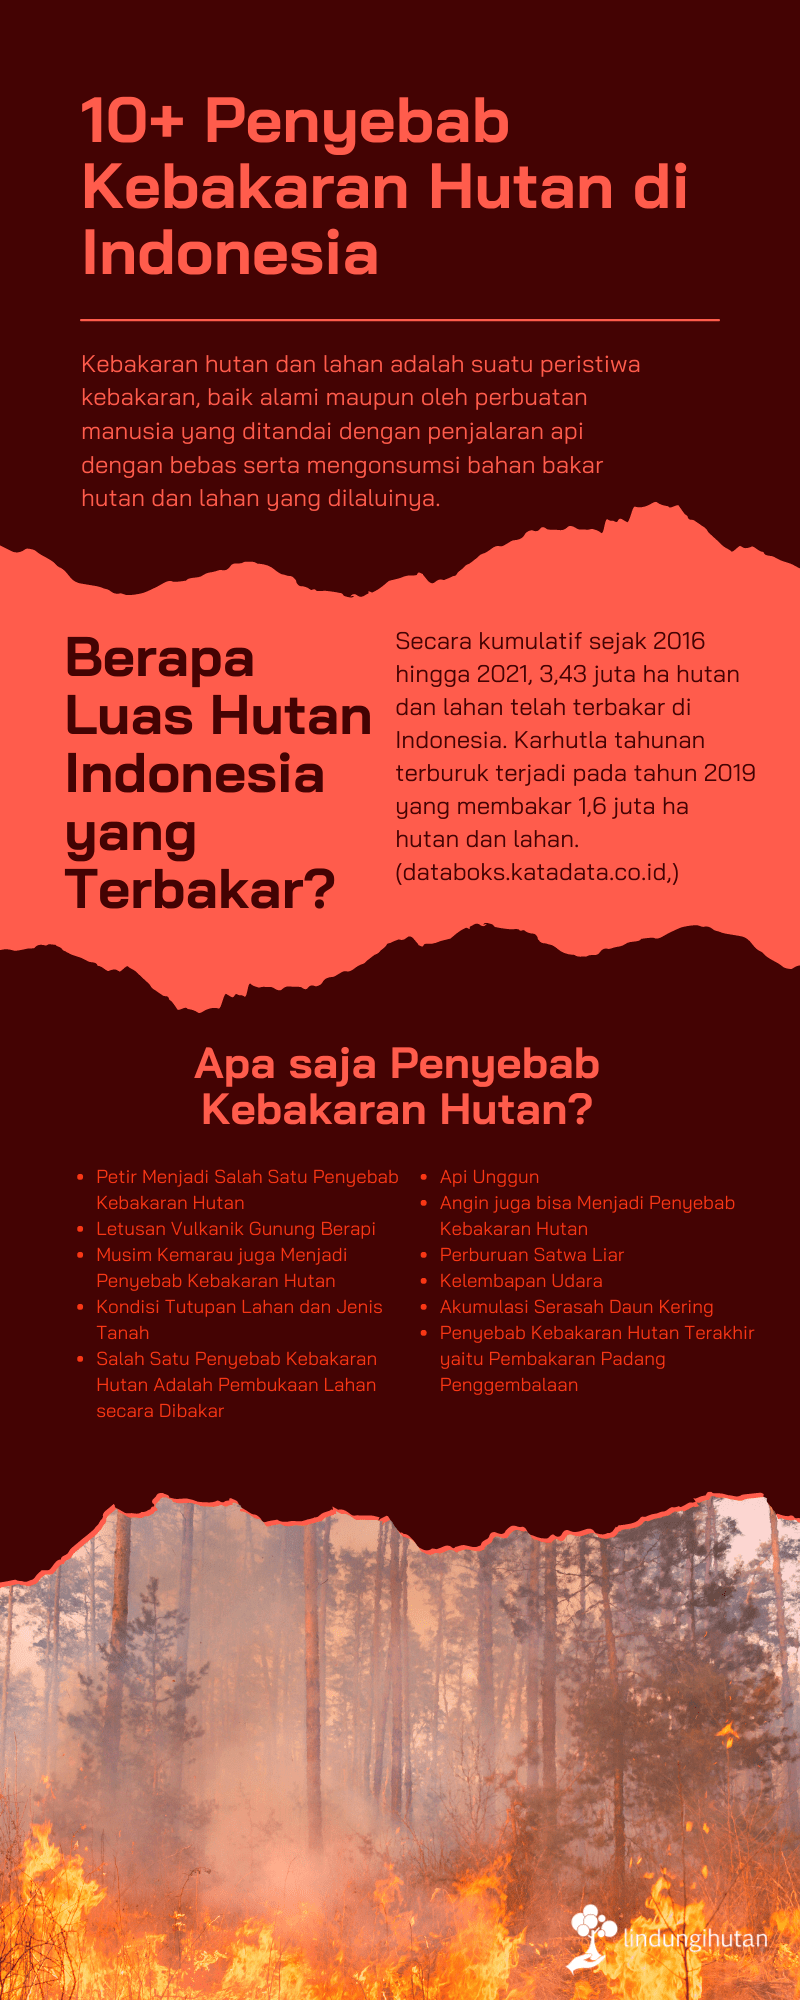 Infografis mengenai kebakaran hutan di Indonesia by LindungiHutan.